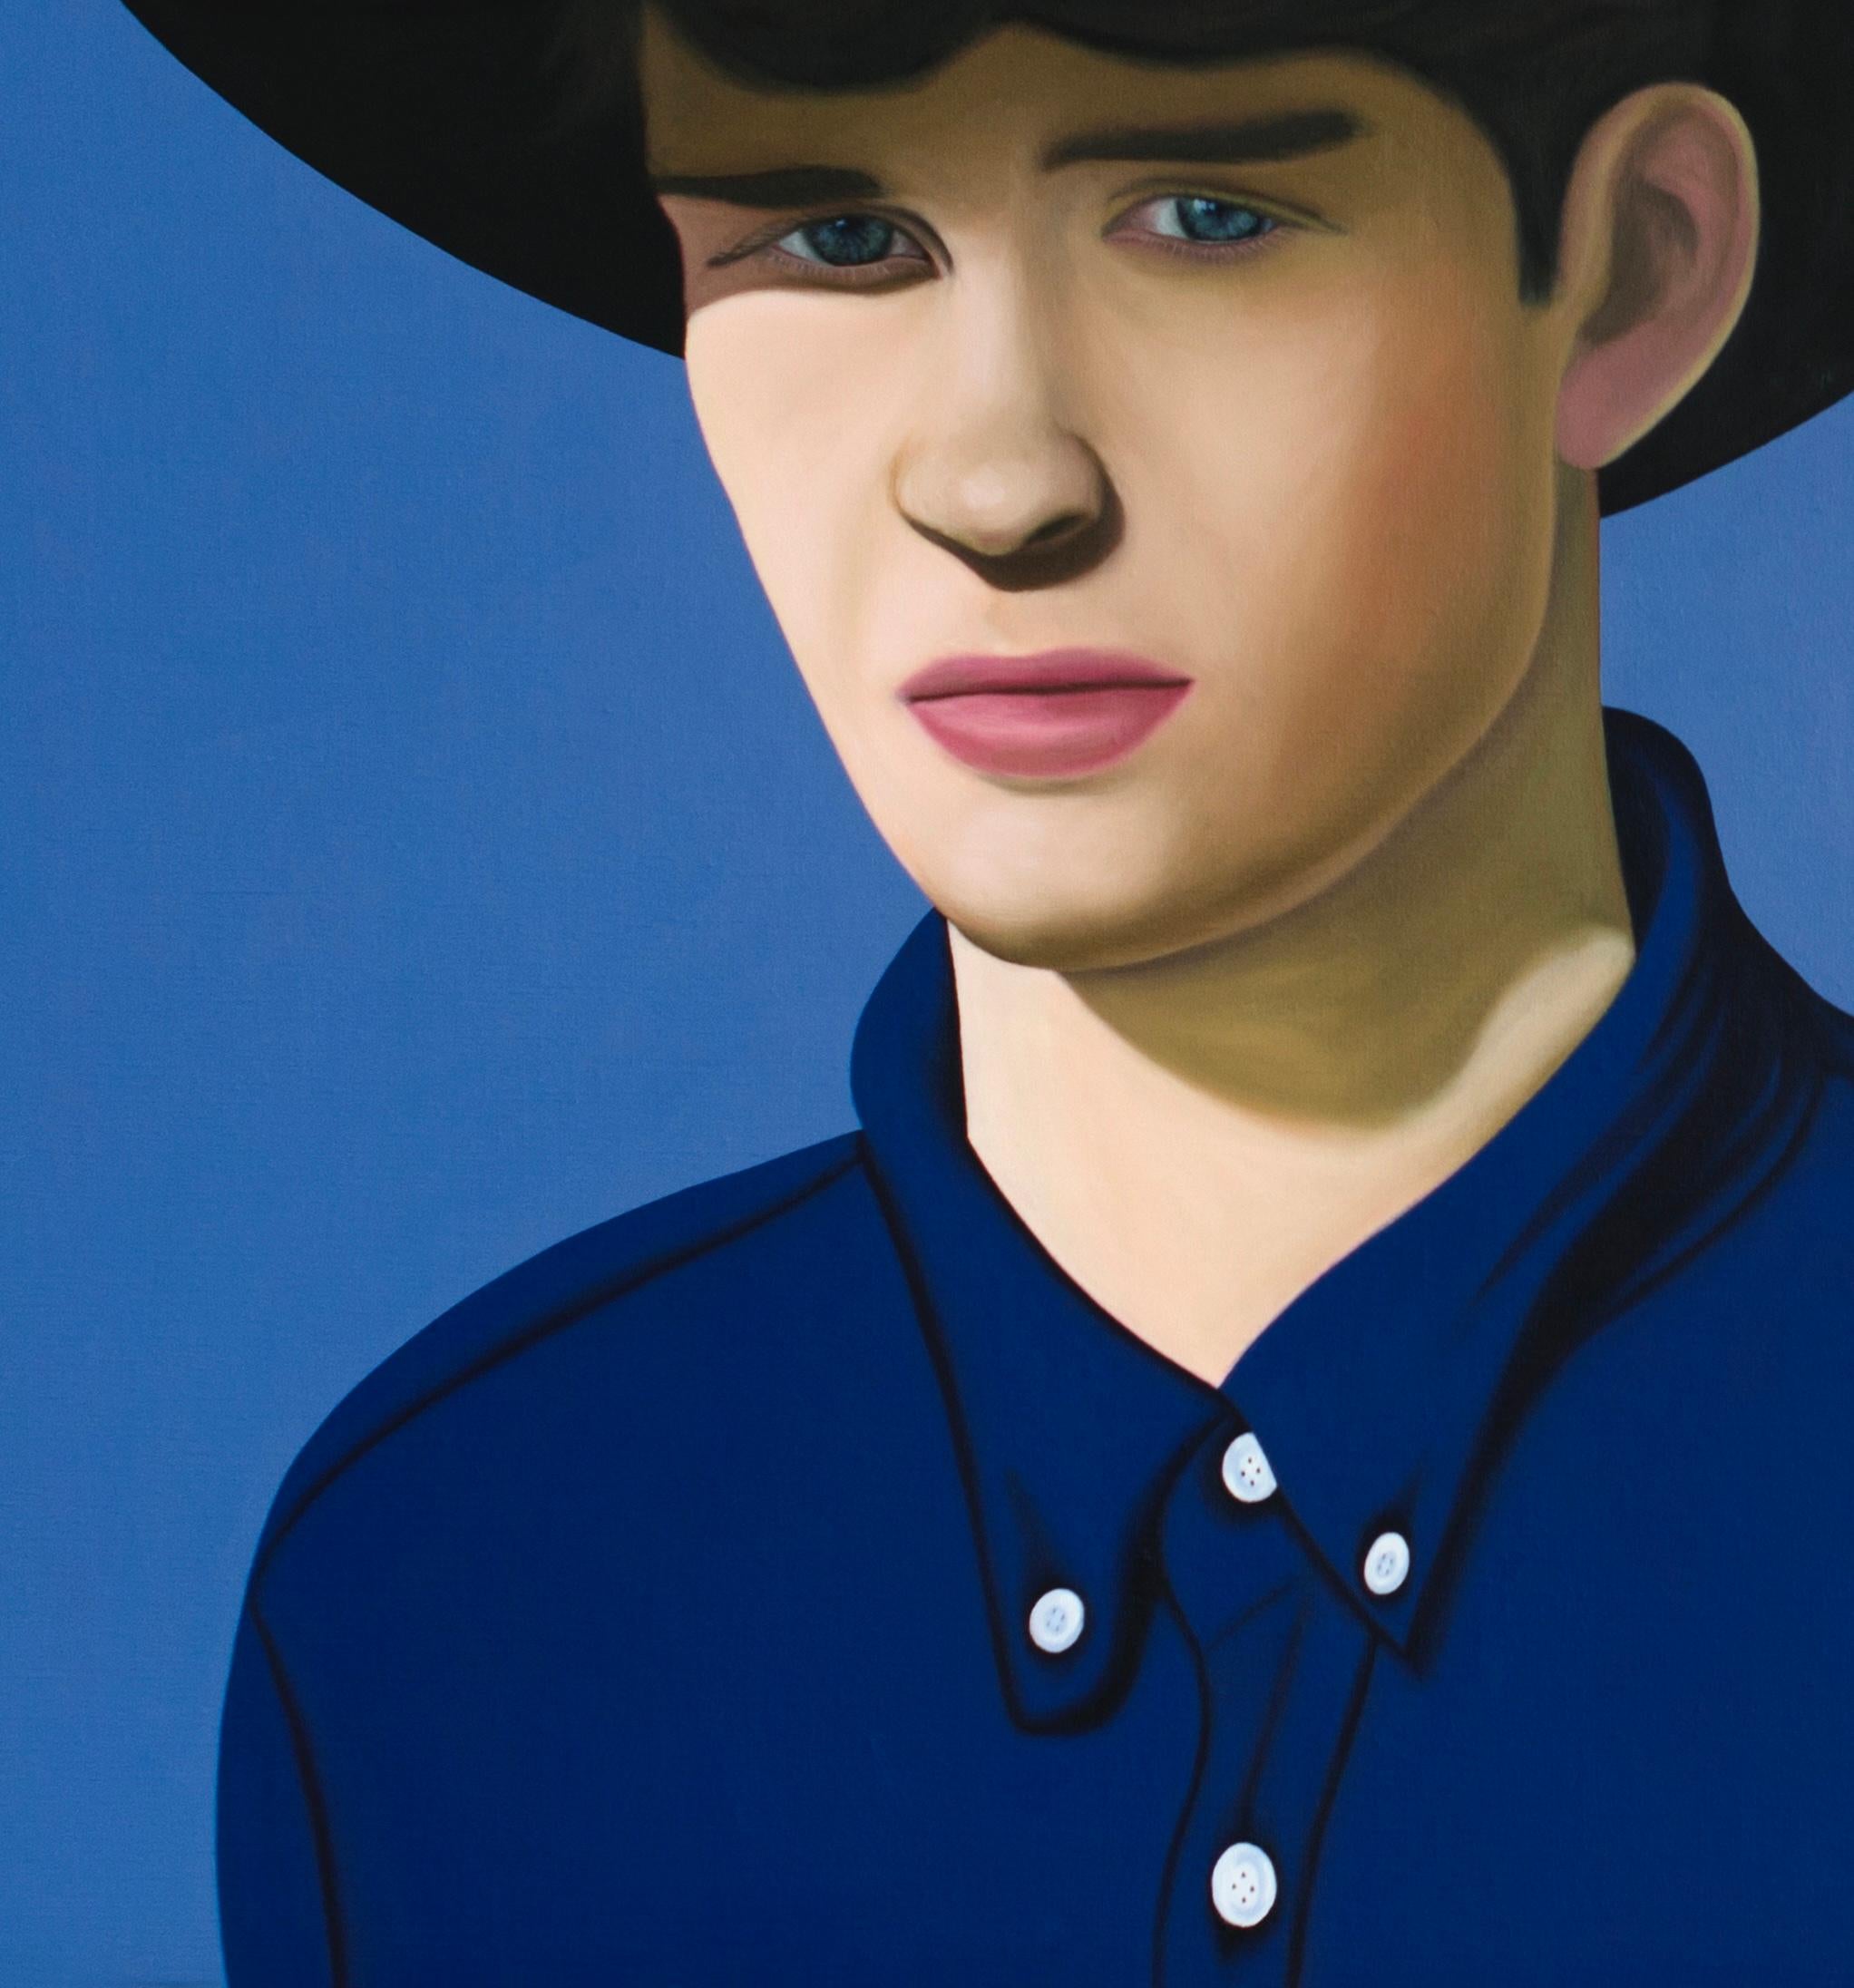 Cowboy Sep 2 - figurative painting - Minimalist Painting by Jeroen Allart